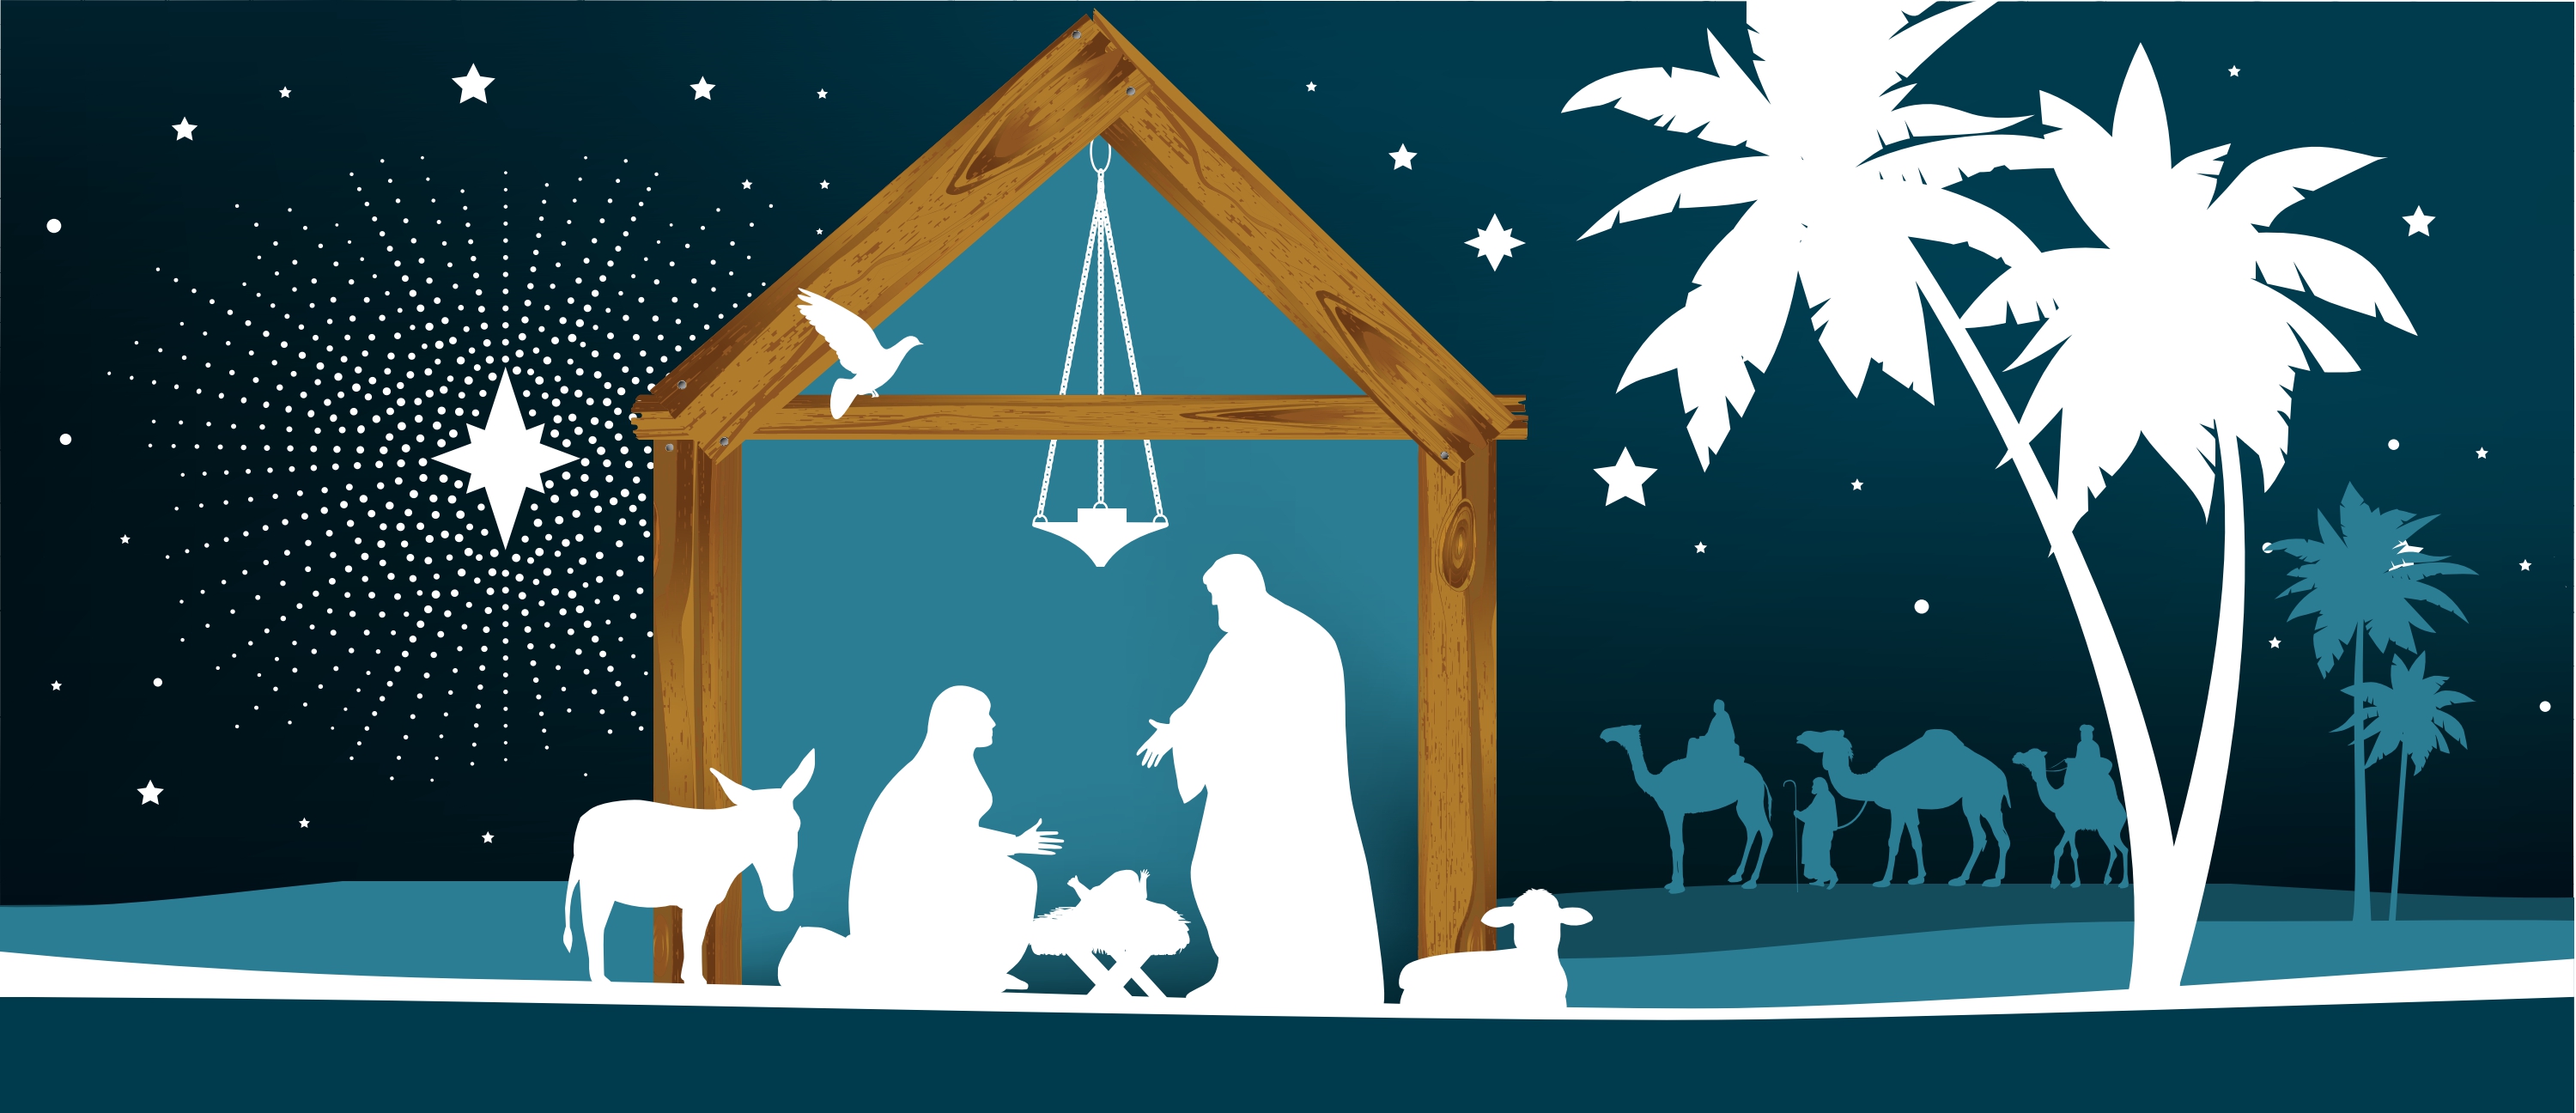 The Nativity of Jesus